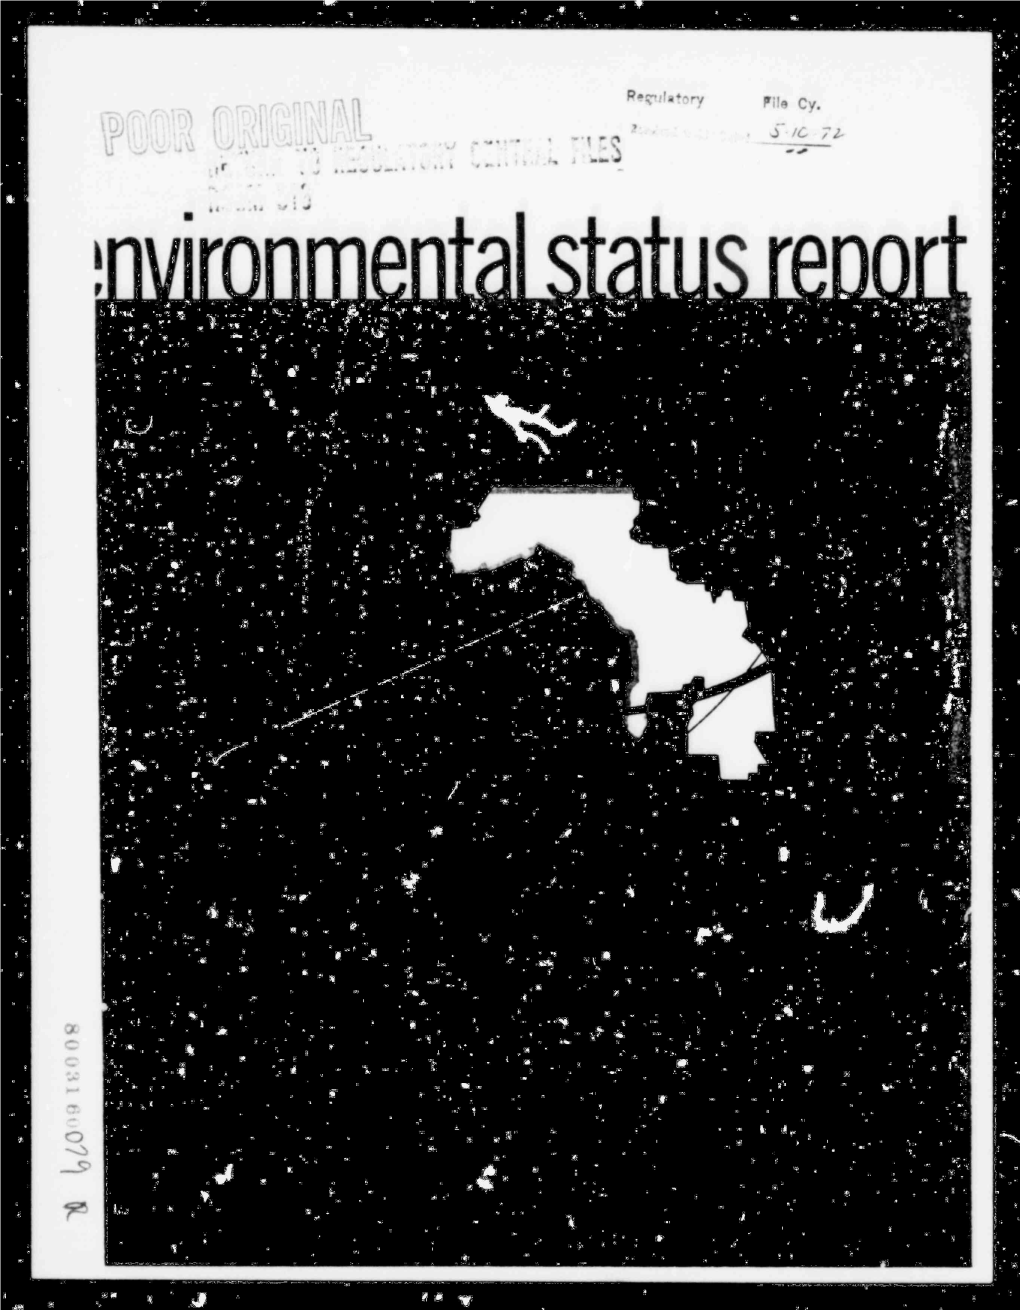 "Quarterly Environ Status Rept,Jan-Mar 1971."